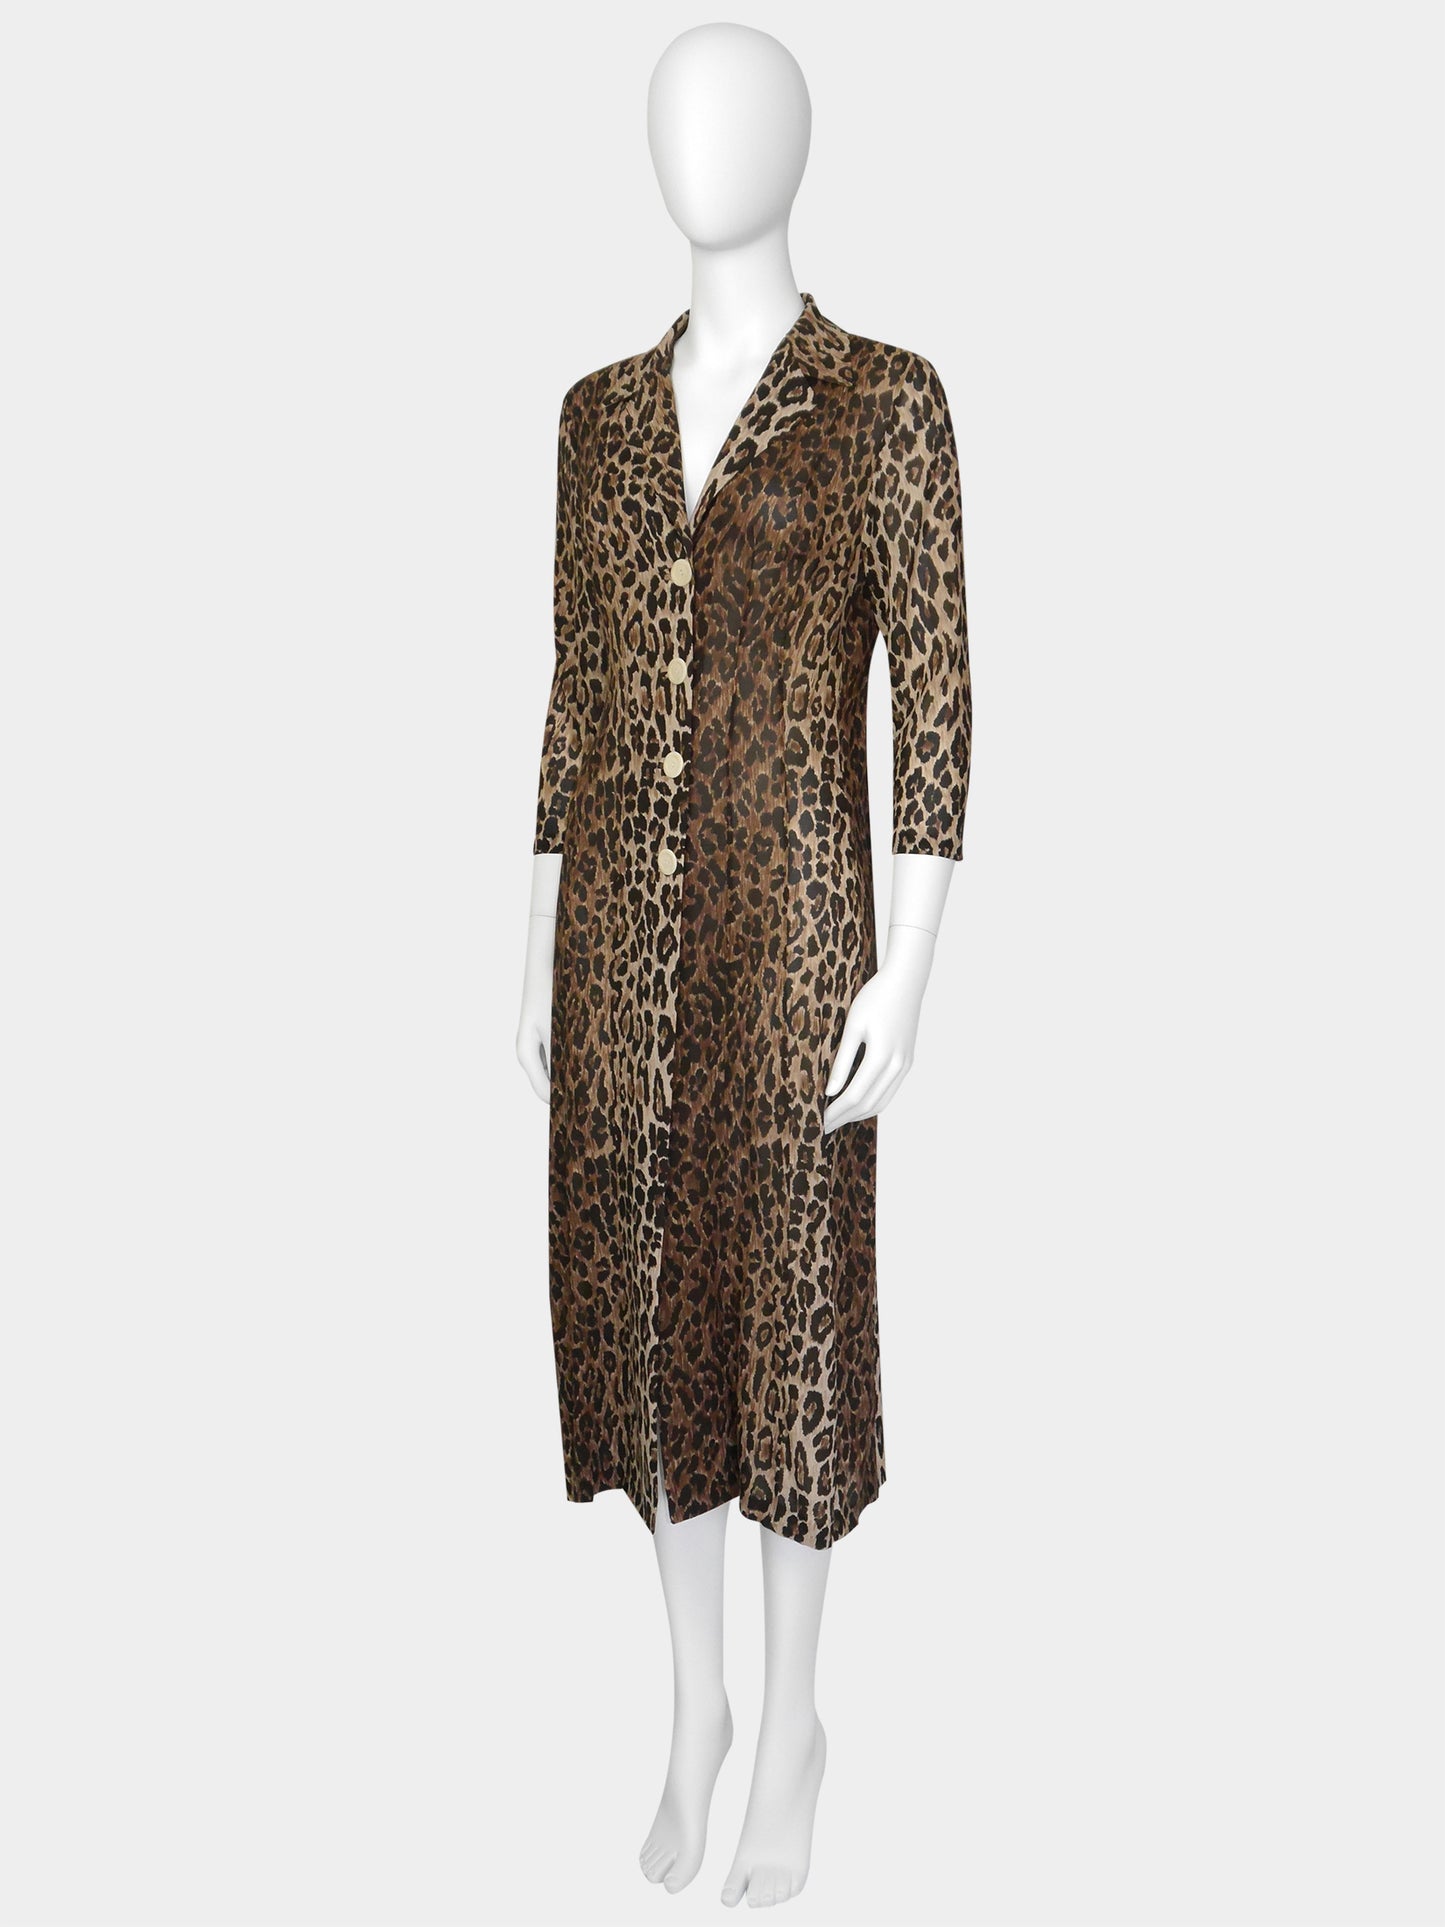 DOLCE & GABBANA Spring 1997 Vintage Leopard Print Silk Evening Coat Size S